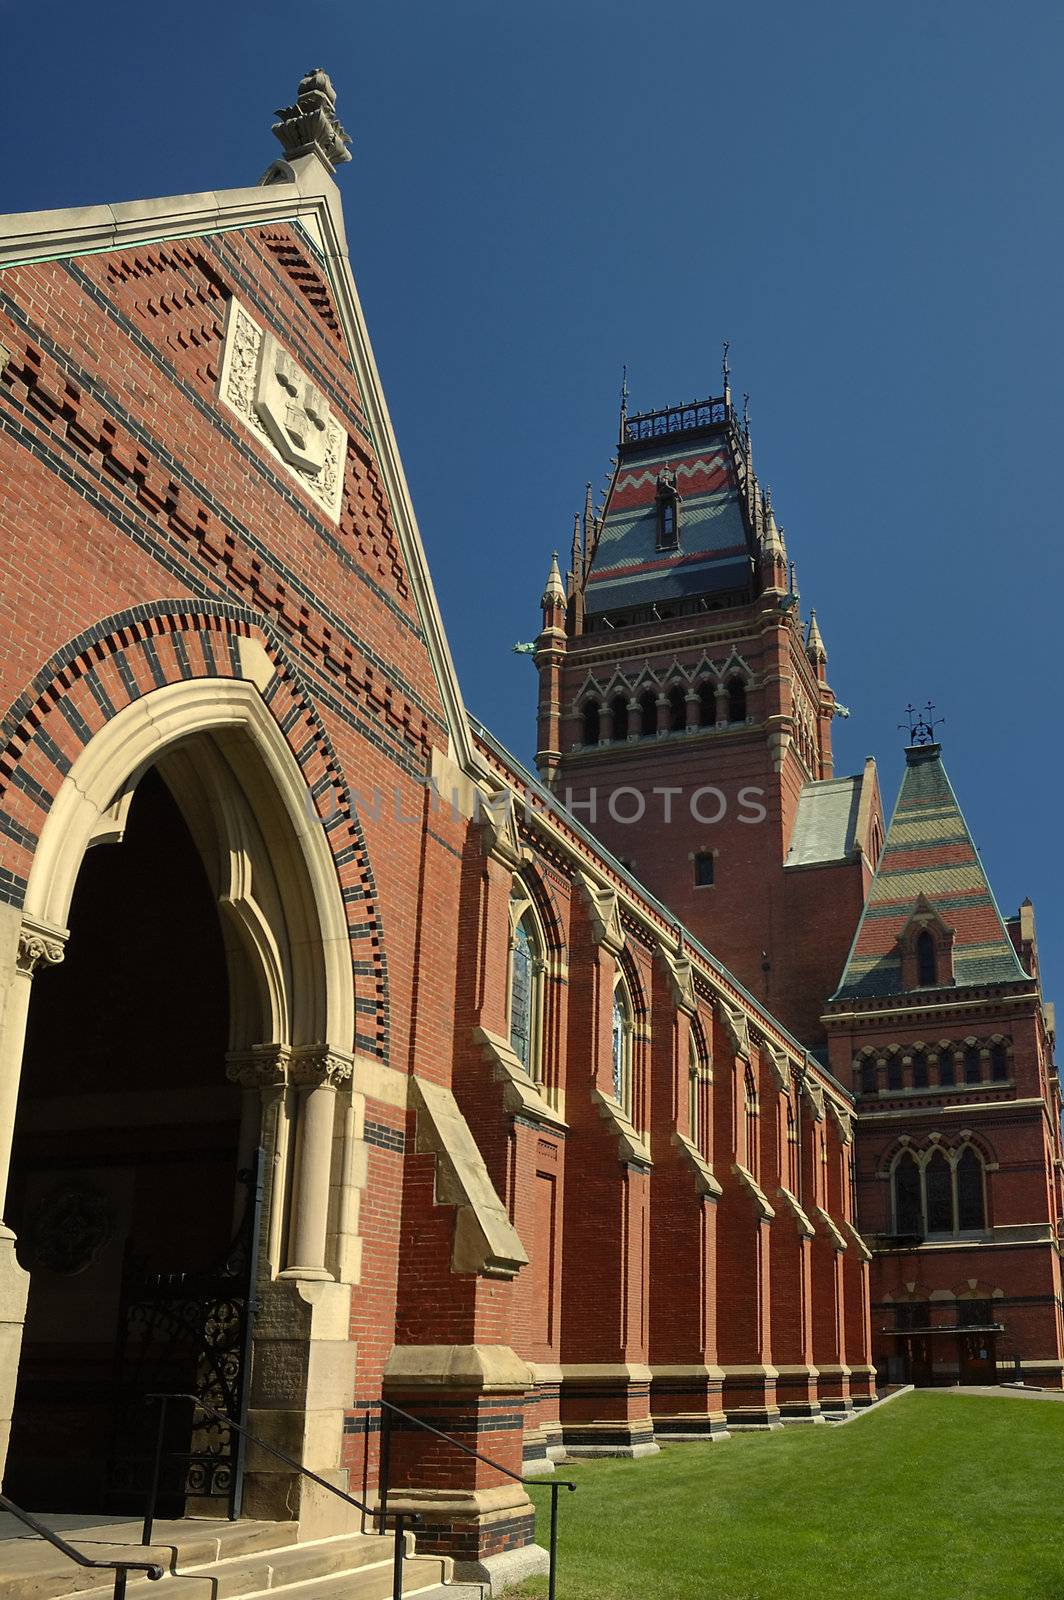 Campus of Harvard University in Boston, clear blue sky